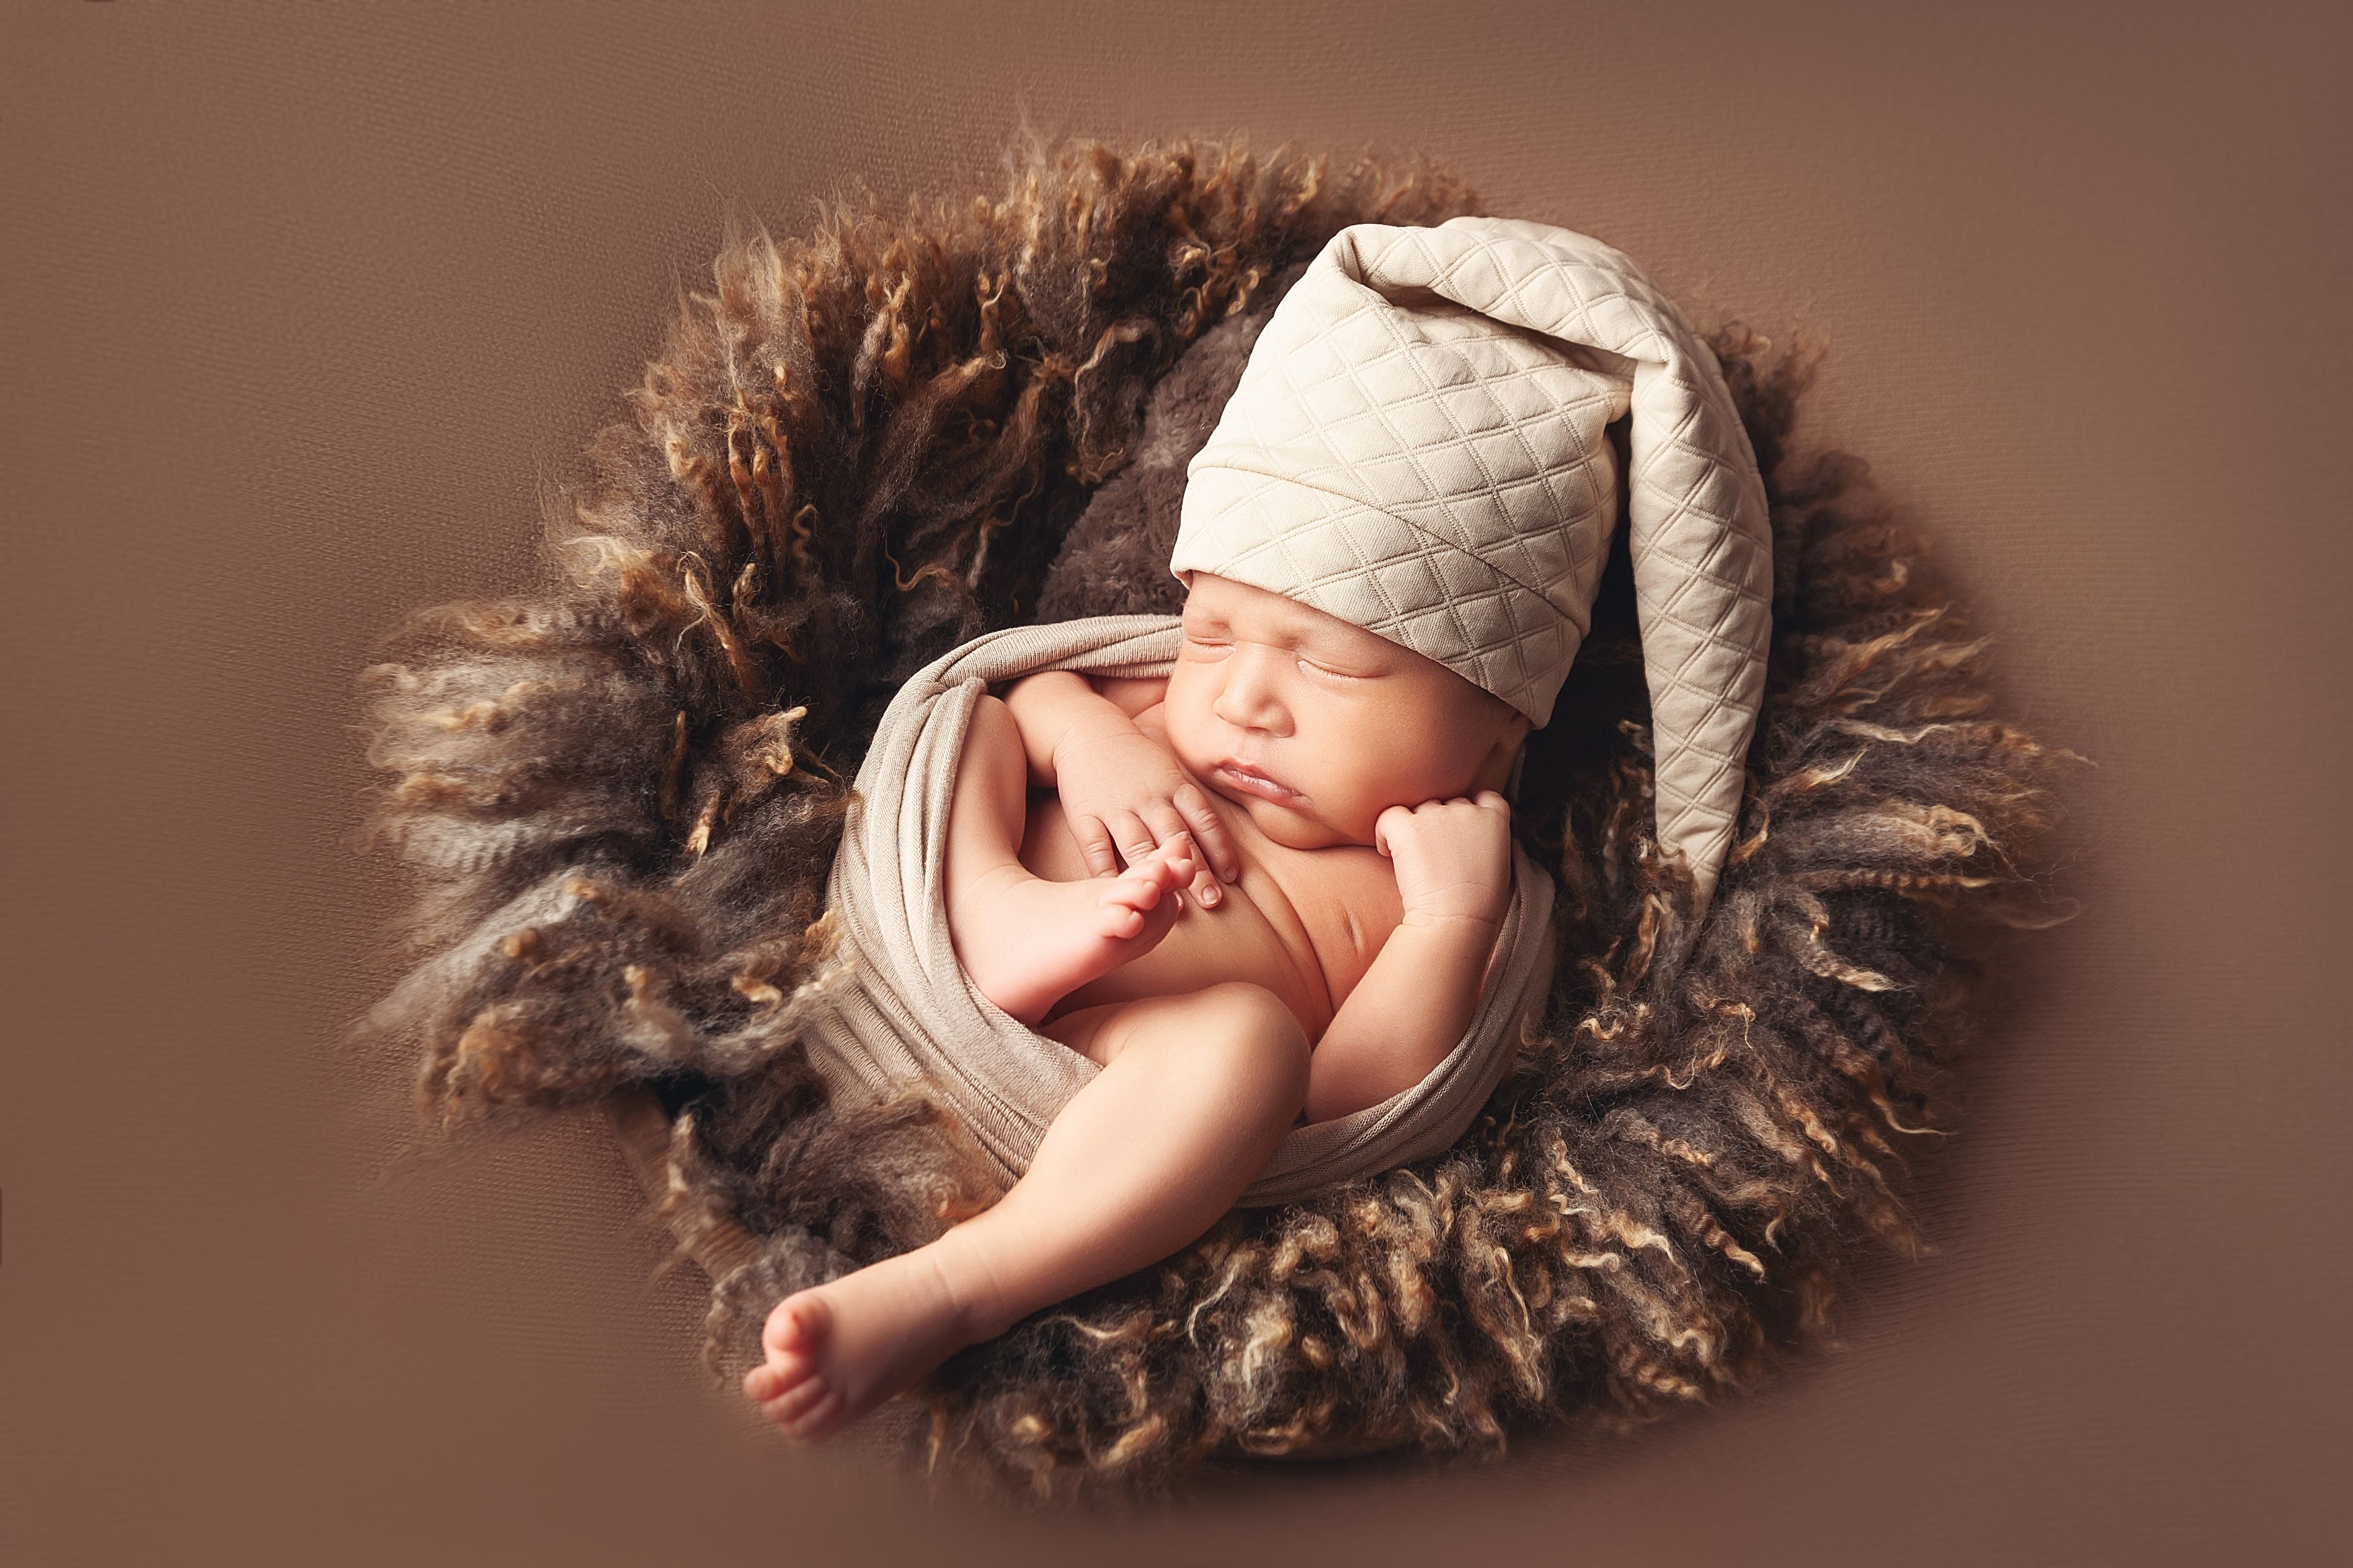 newbornphotography, love, baby, family, newborn, babyphoto, familyphoto, children, childrenphoto, babynewborn, childrenphotography, newbornphoto, малыш, ньюборн, новорождённый, мальчик, новорождённый малыш, мальчишка, Фалько Ману